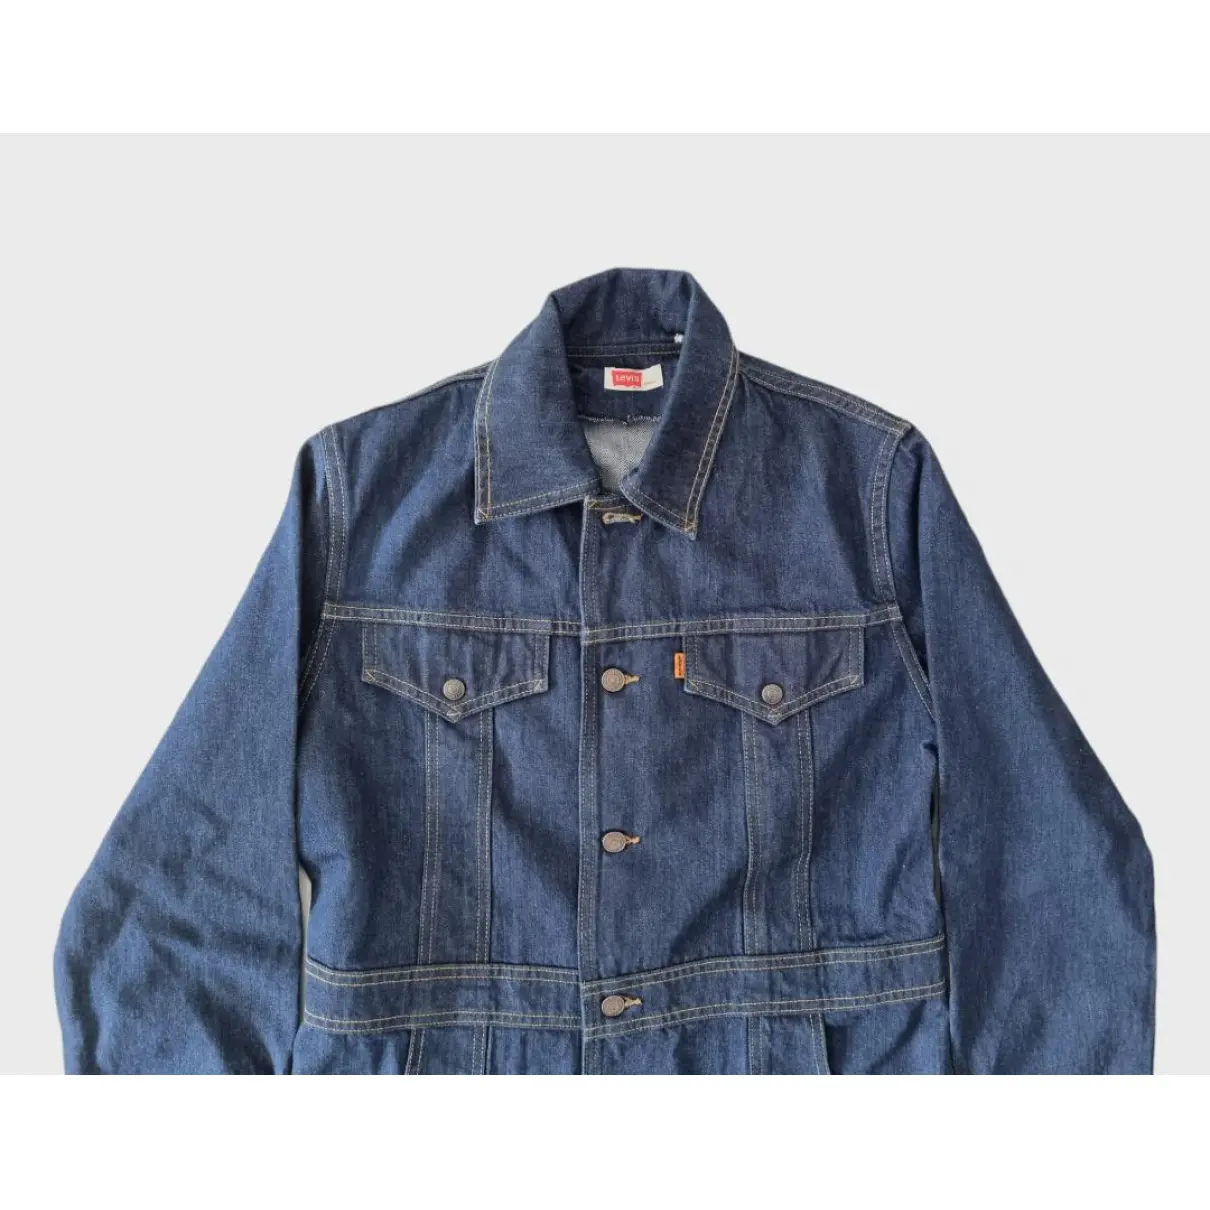 Buy Levi's Vintage Clothing Vest online